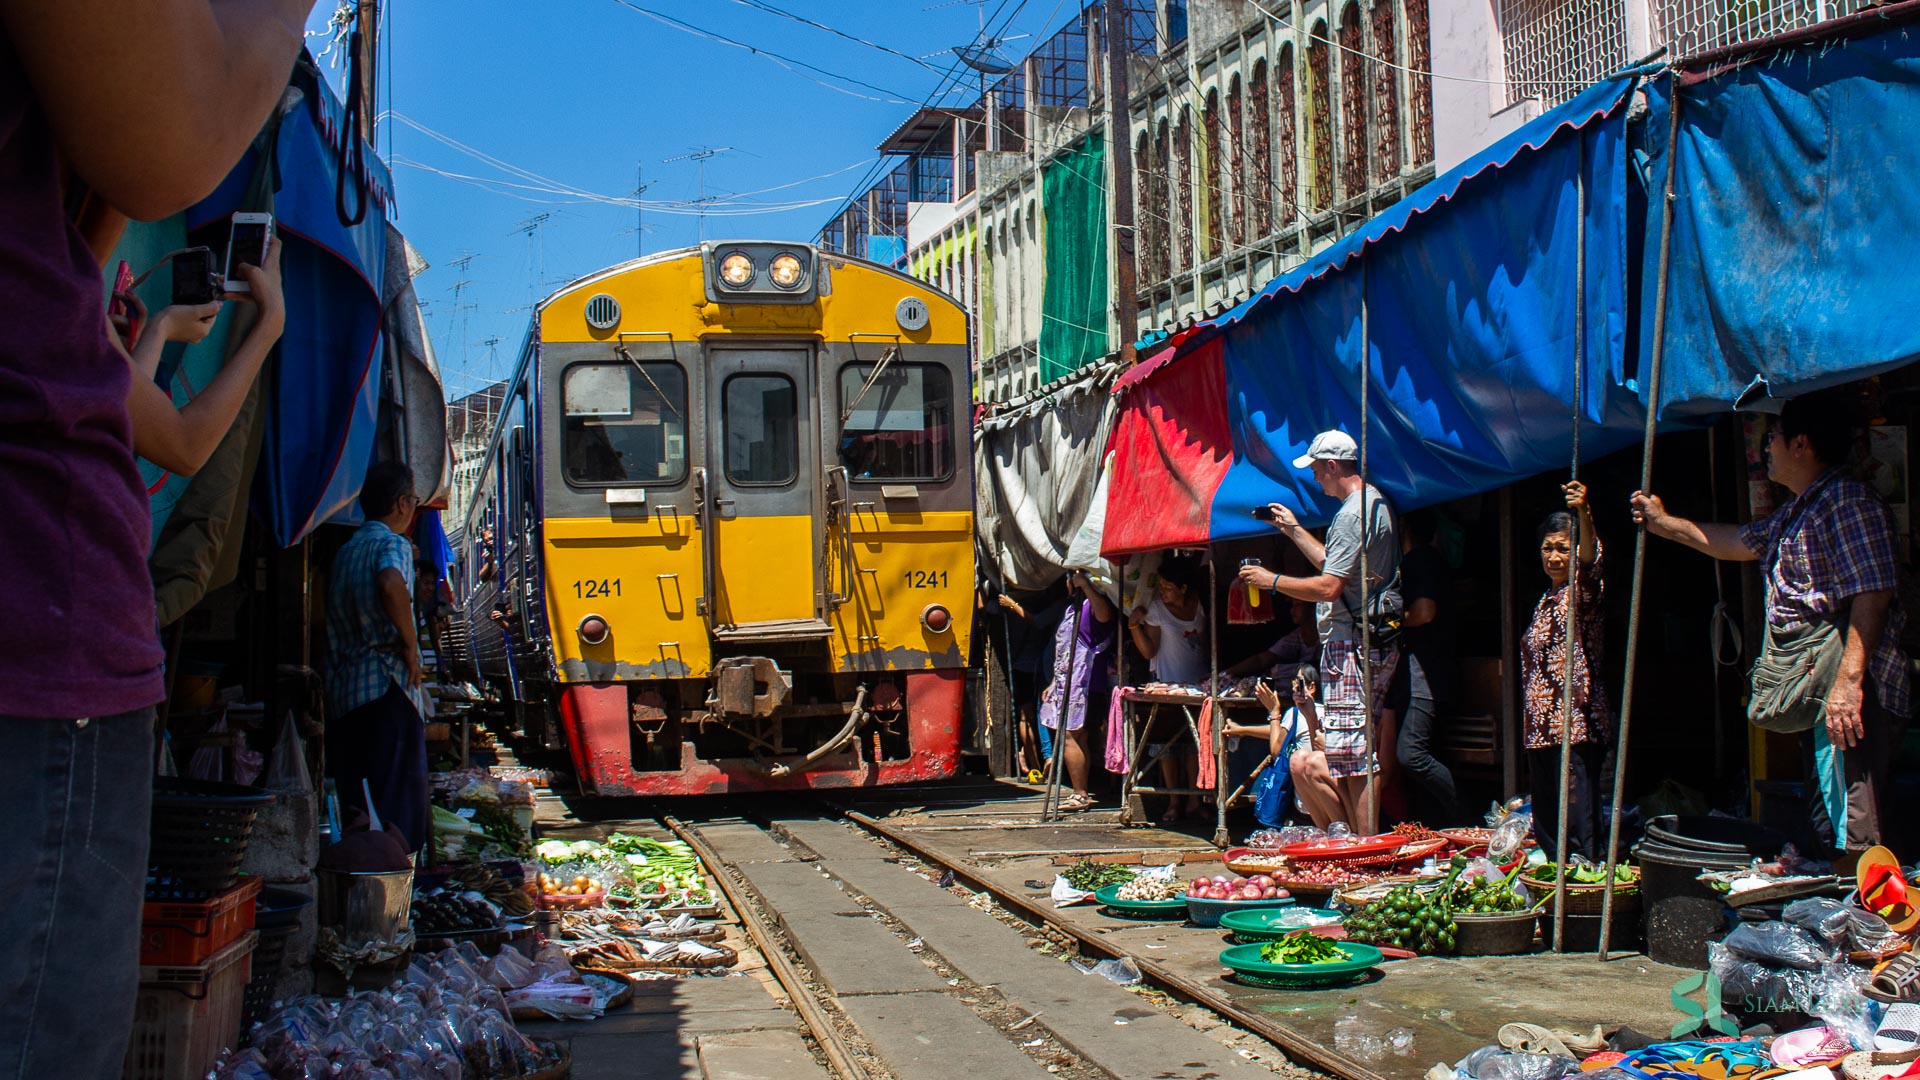 A train approaches through the Umbrella Pull-down Market